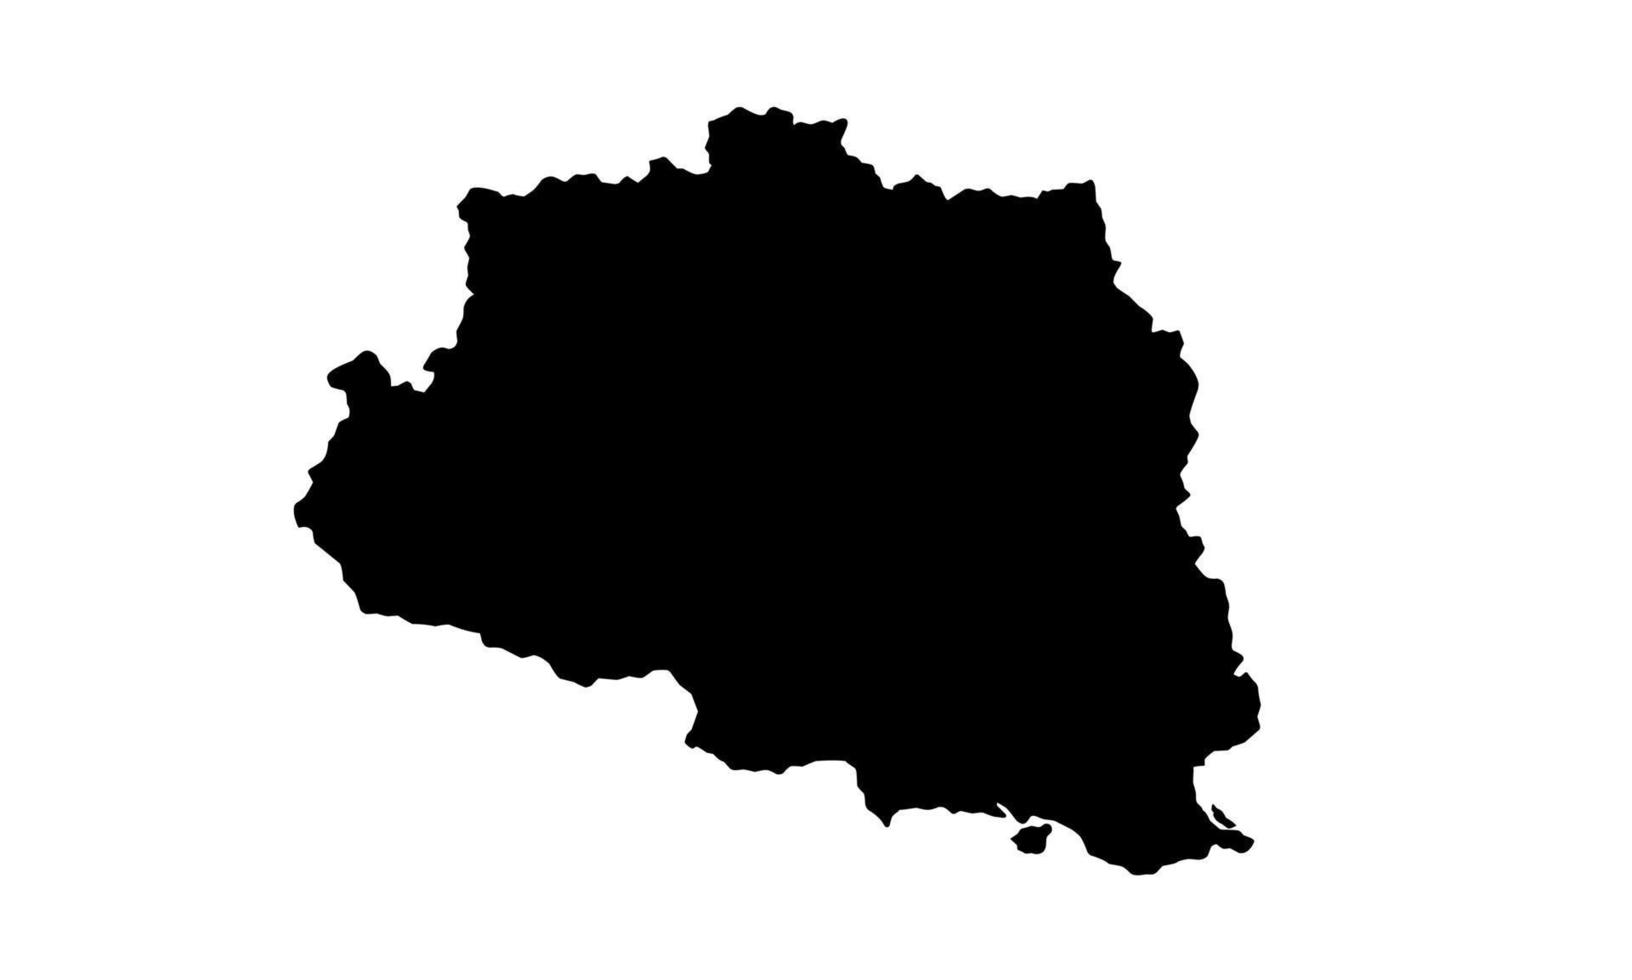 rajshahi mapa silueta negra sobre fondo blanco vector